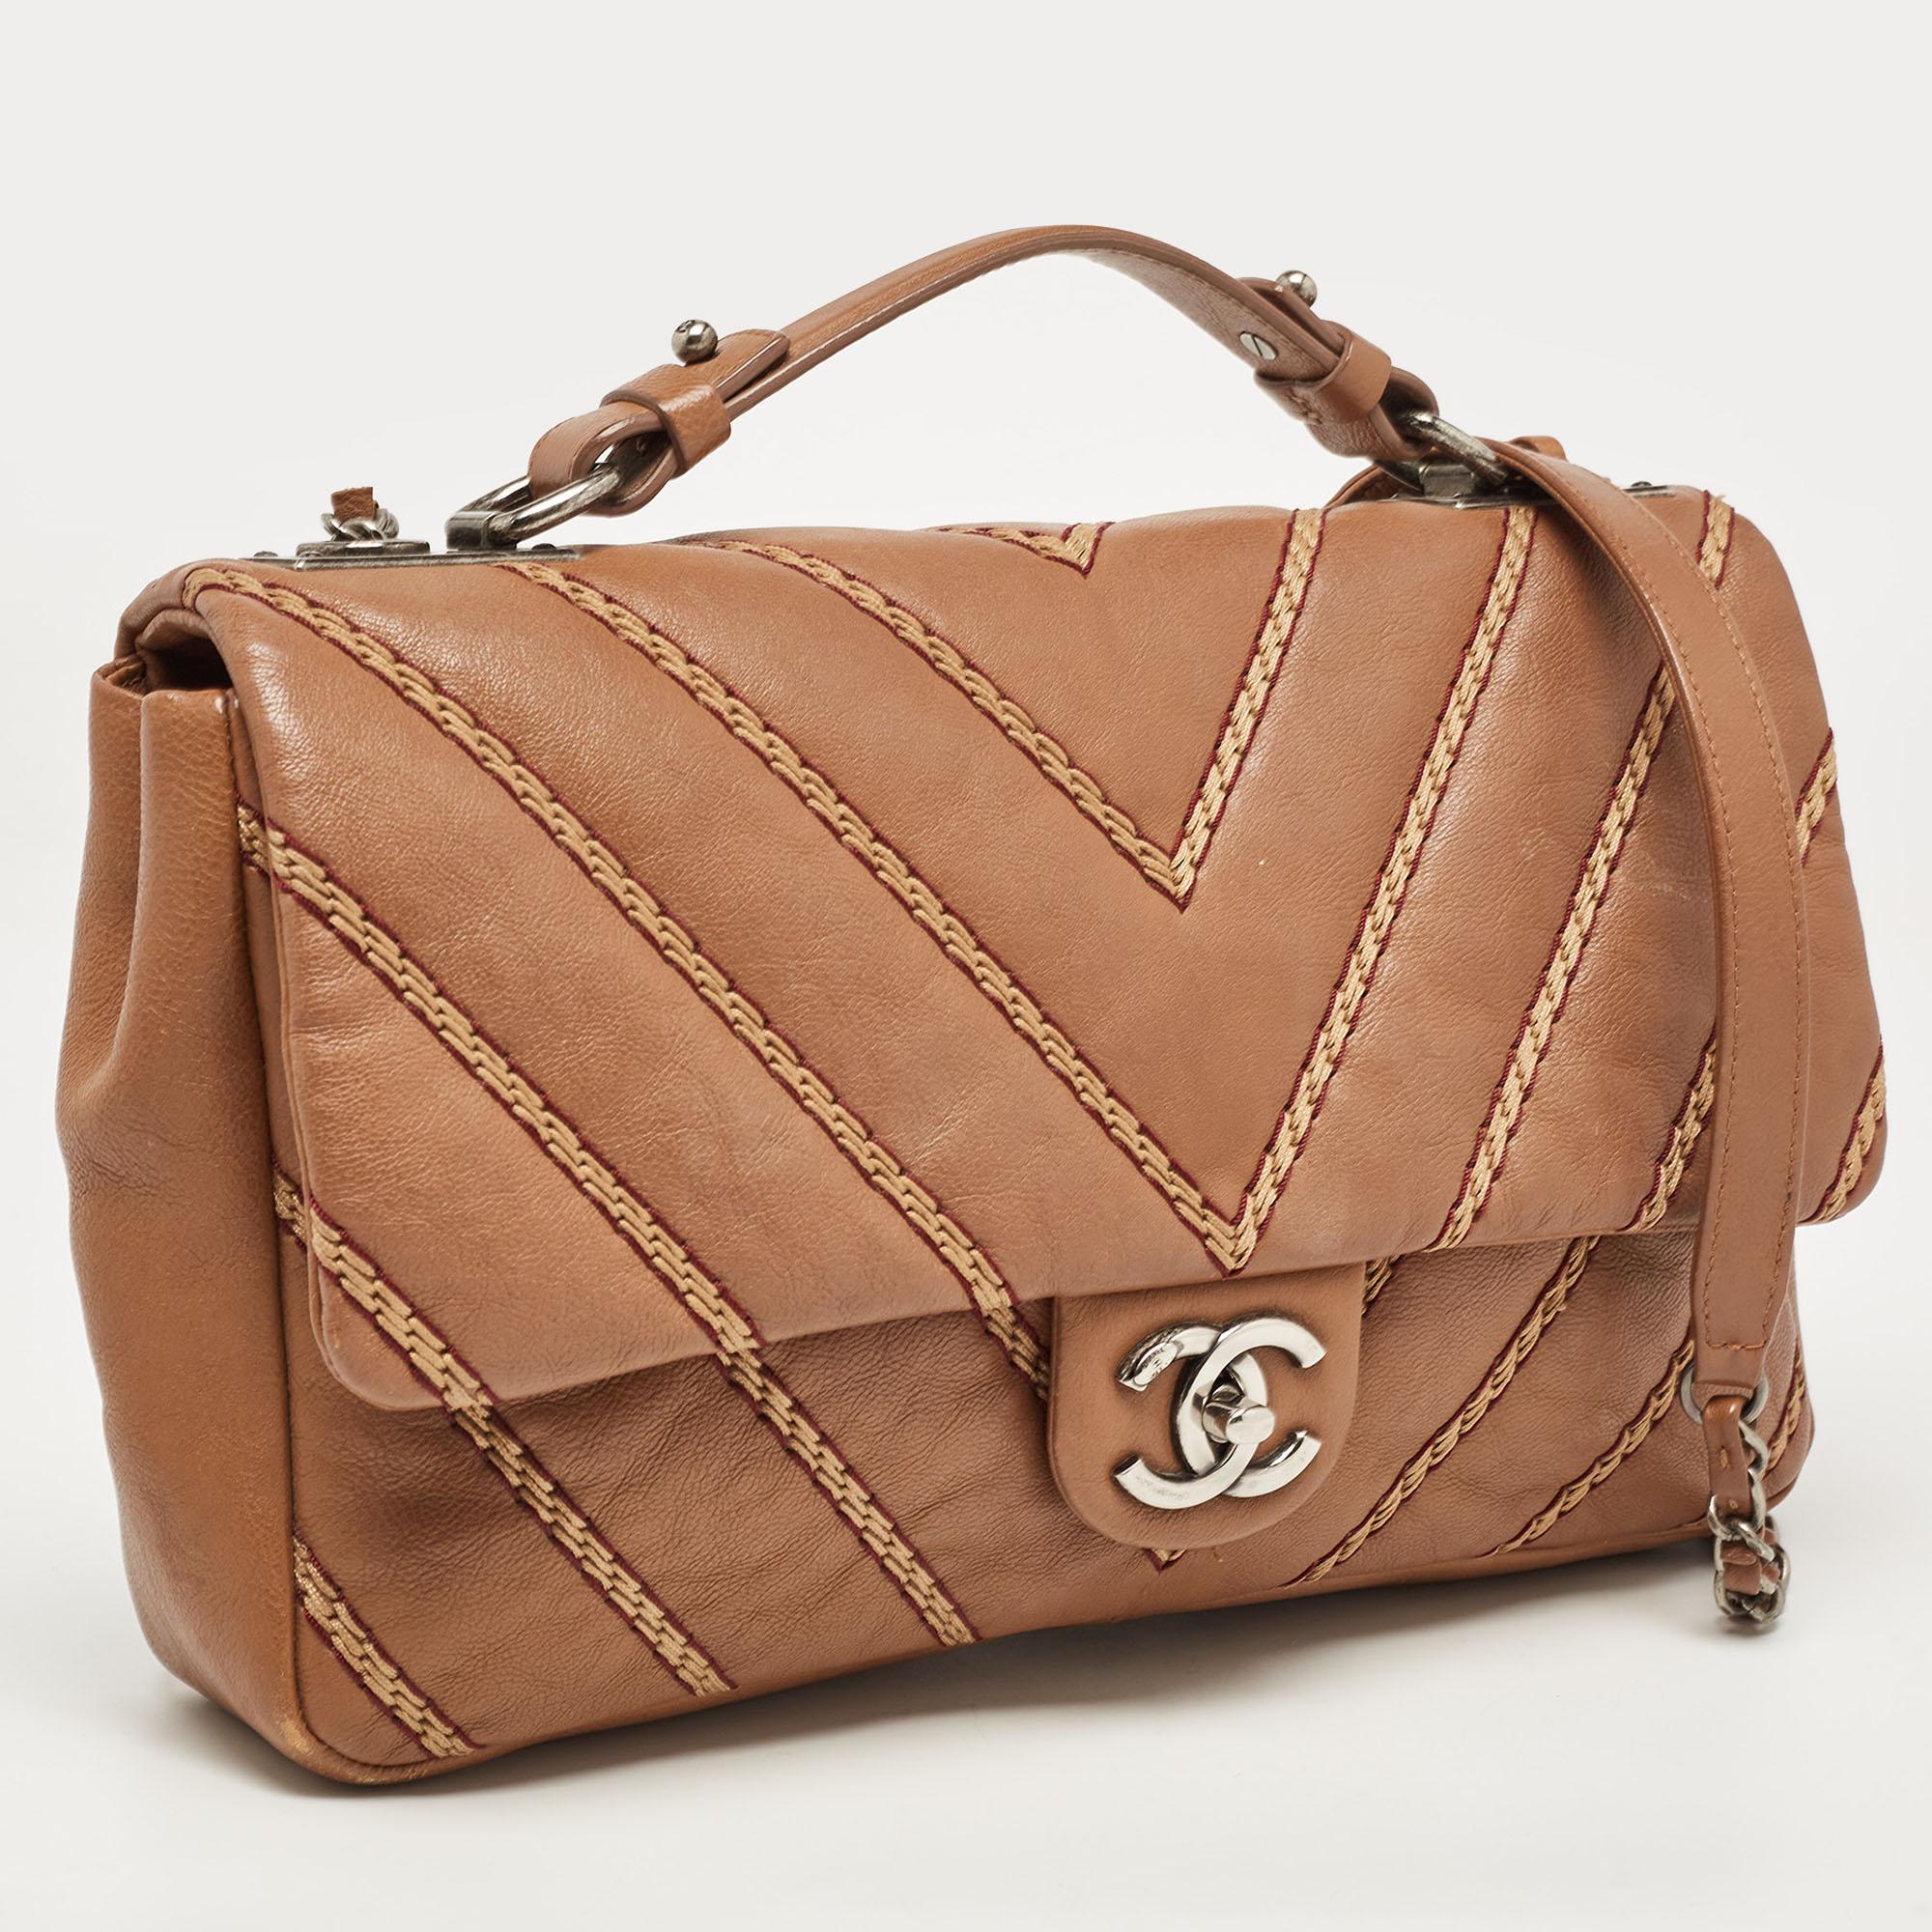 Chanel Brown Chevron Stitched Leather Classic Top Handle Bag In Good Condition For Sale In Dubai, Al Qouz 2